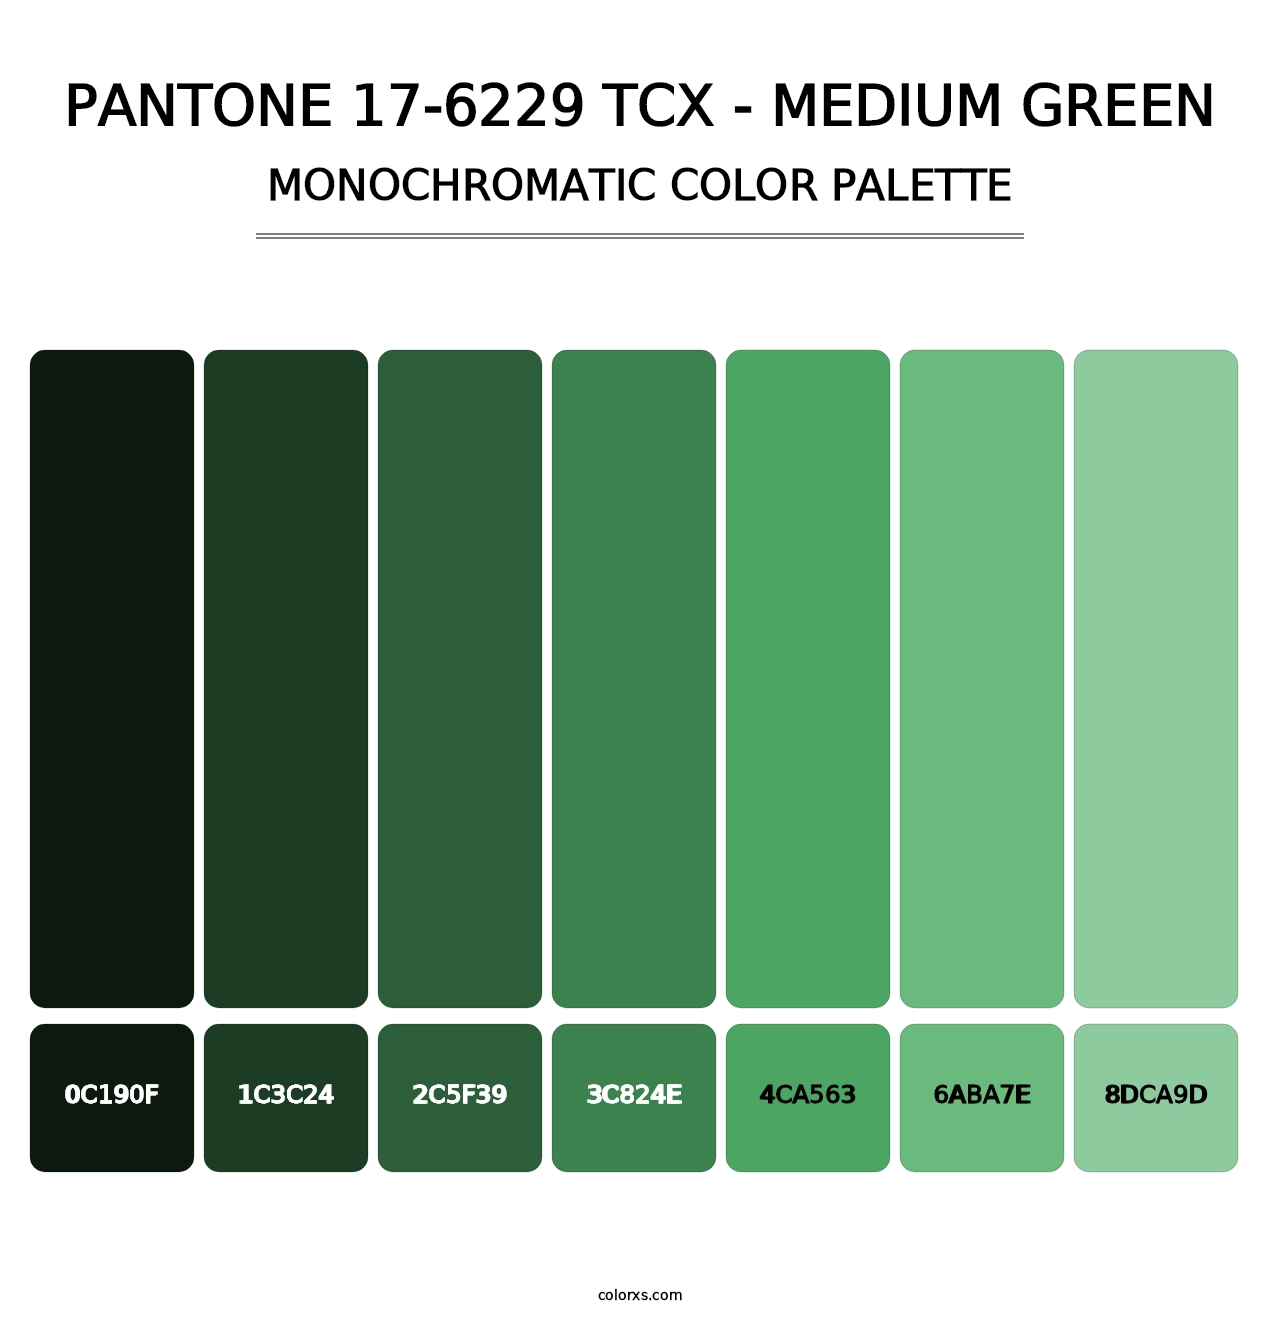 PANTONE 17-6229 TCX - Medium Green - Monochromatic Color Palette